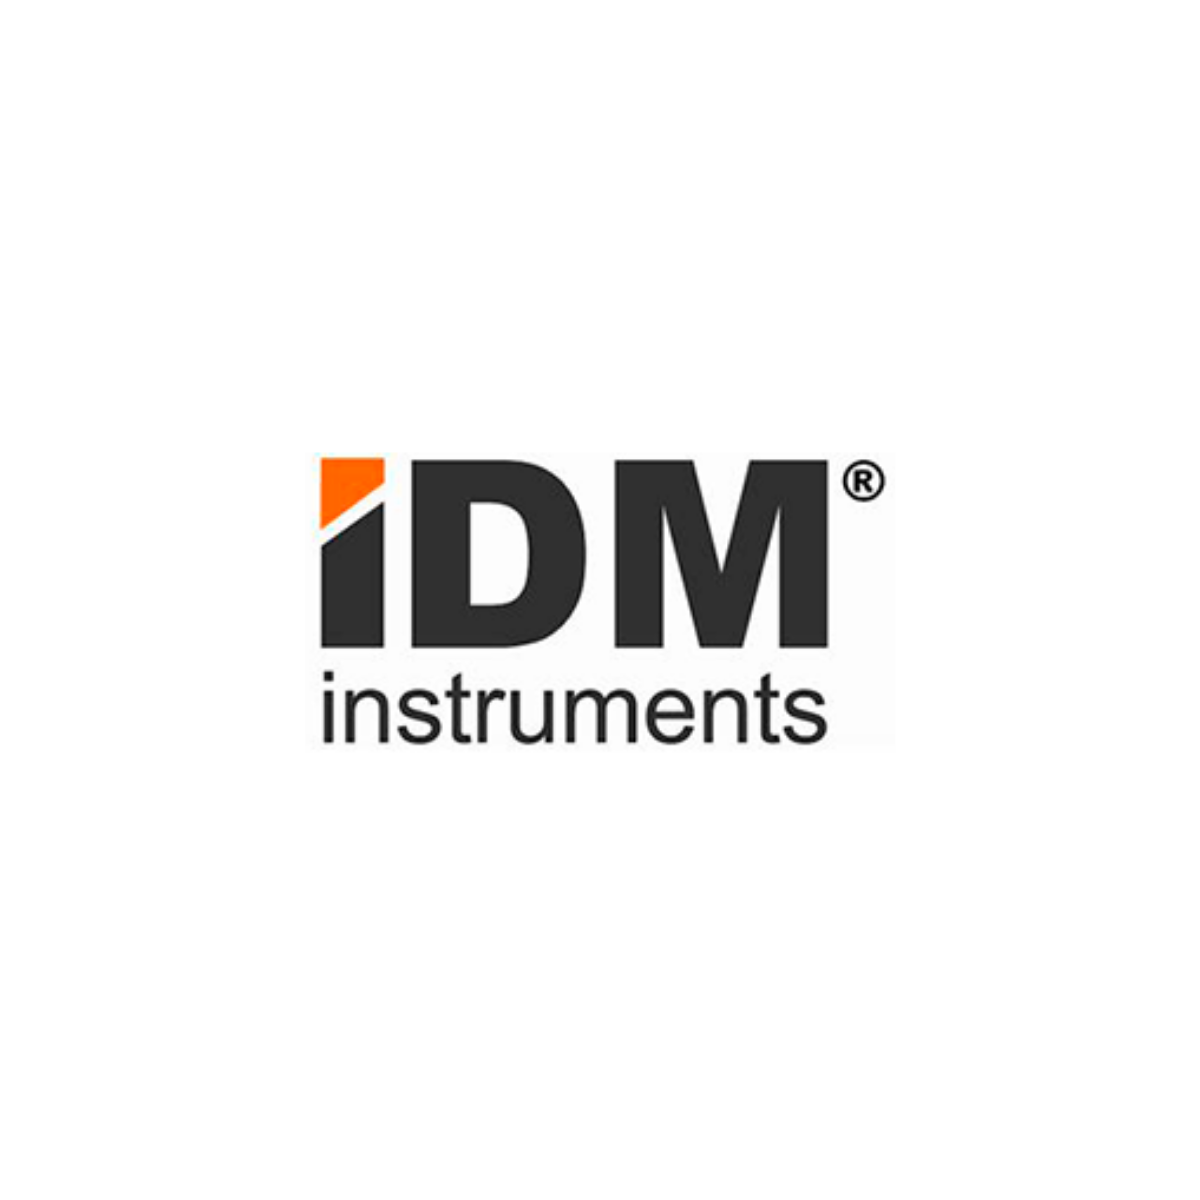 IDM Instruments私人有限公司。